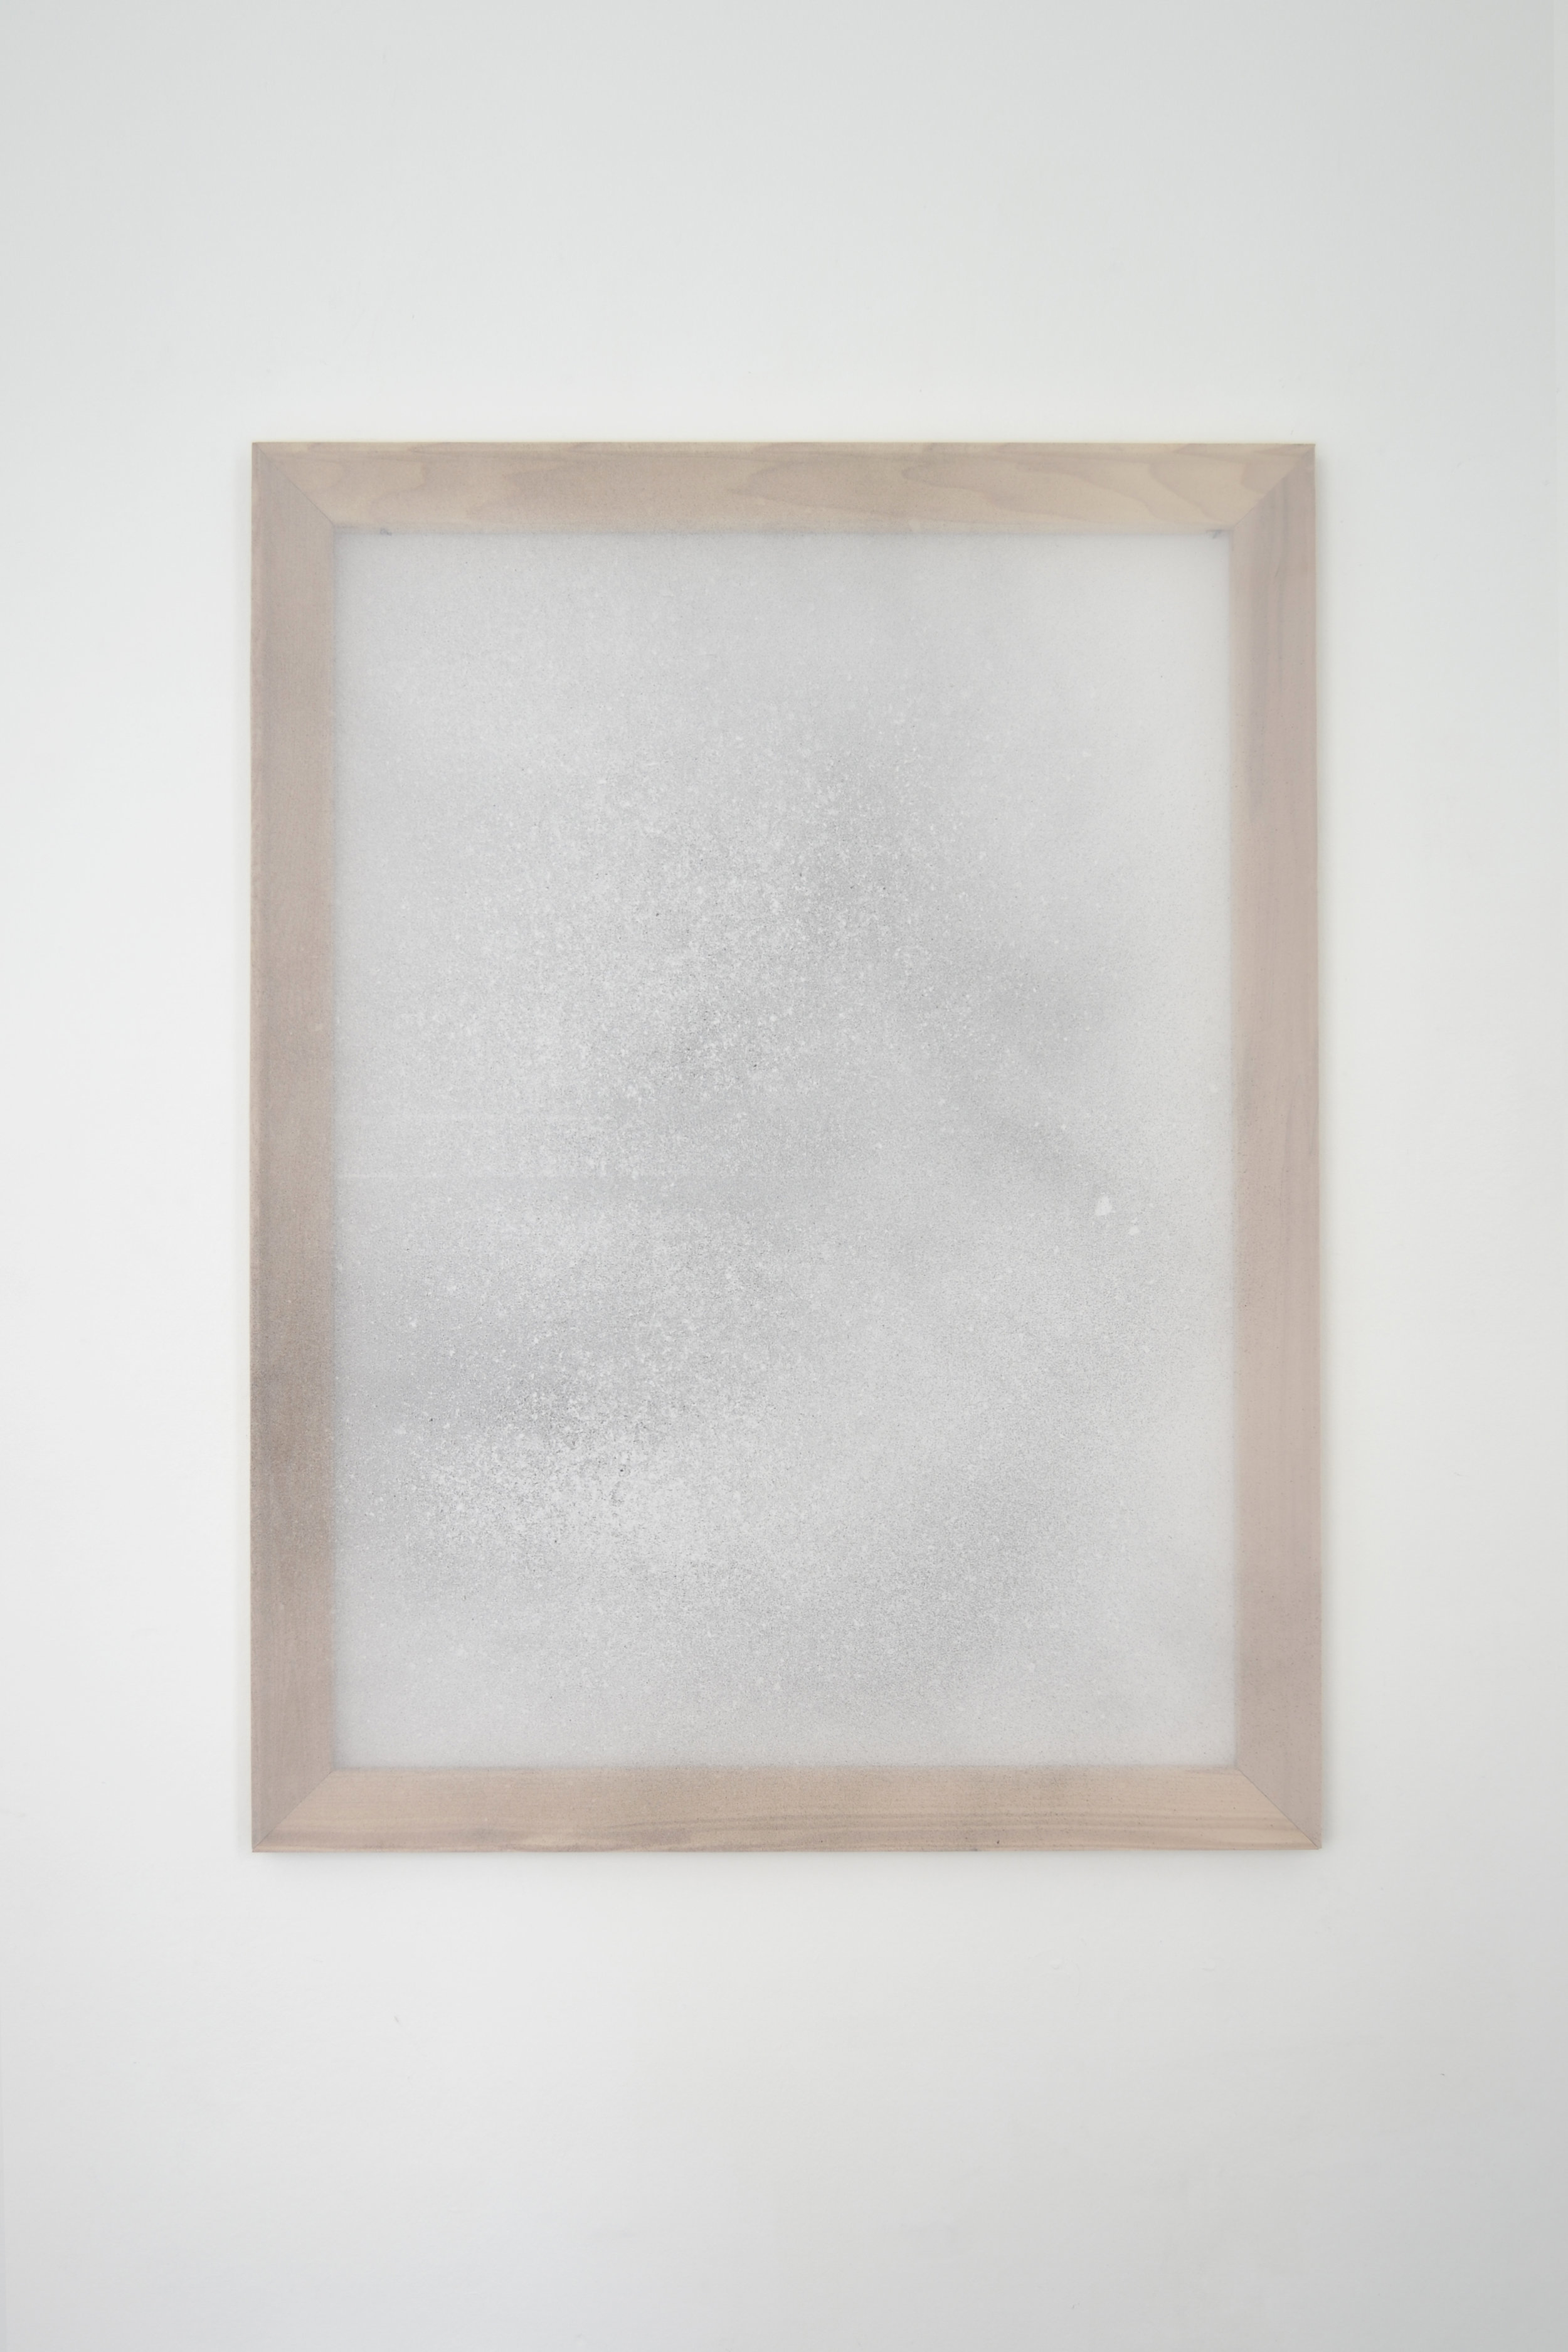   Untitled (Silk Chiffon #2)   2019  Enamel Paint and Dirt on Silk Chiffon  16 x 12 inches 